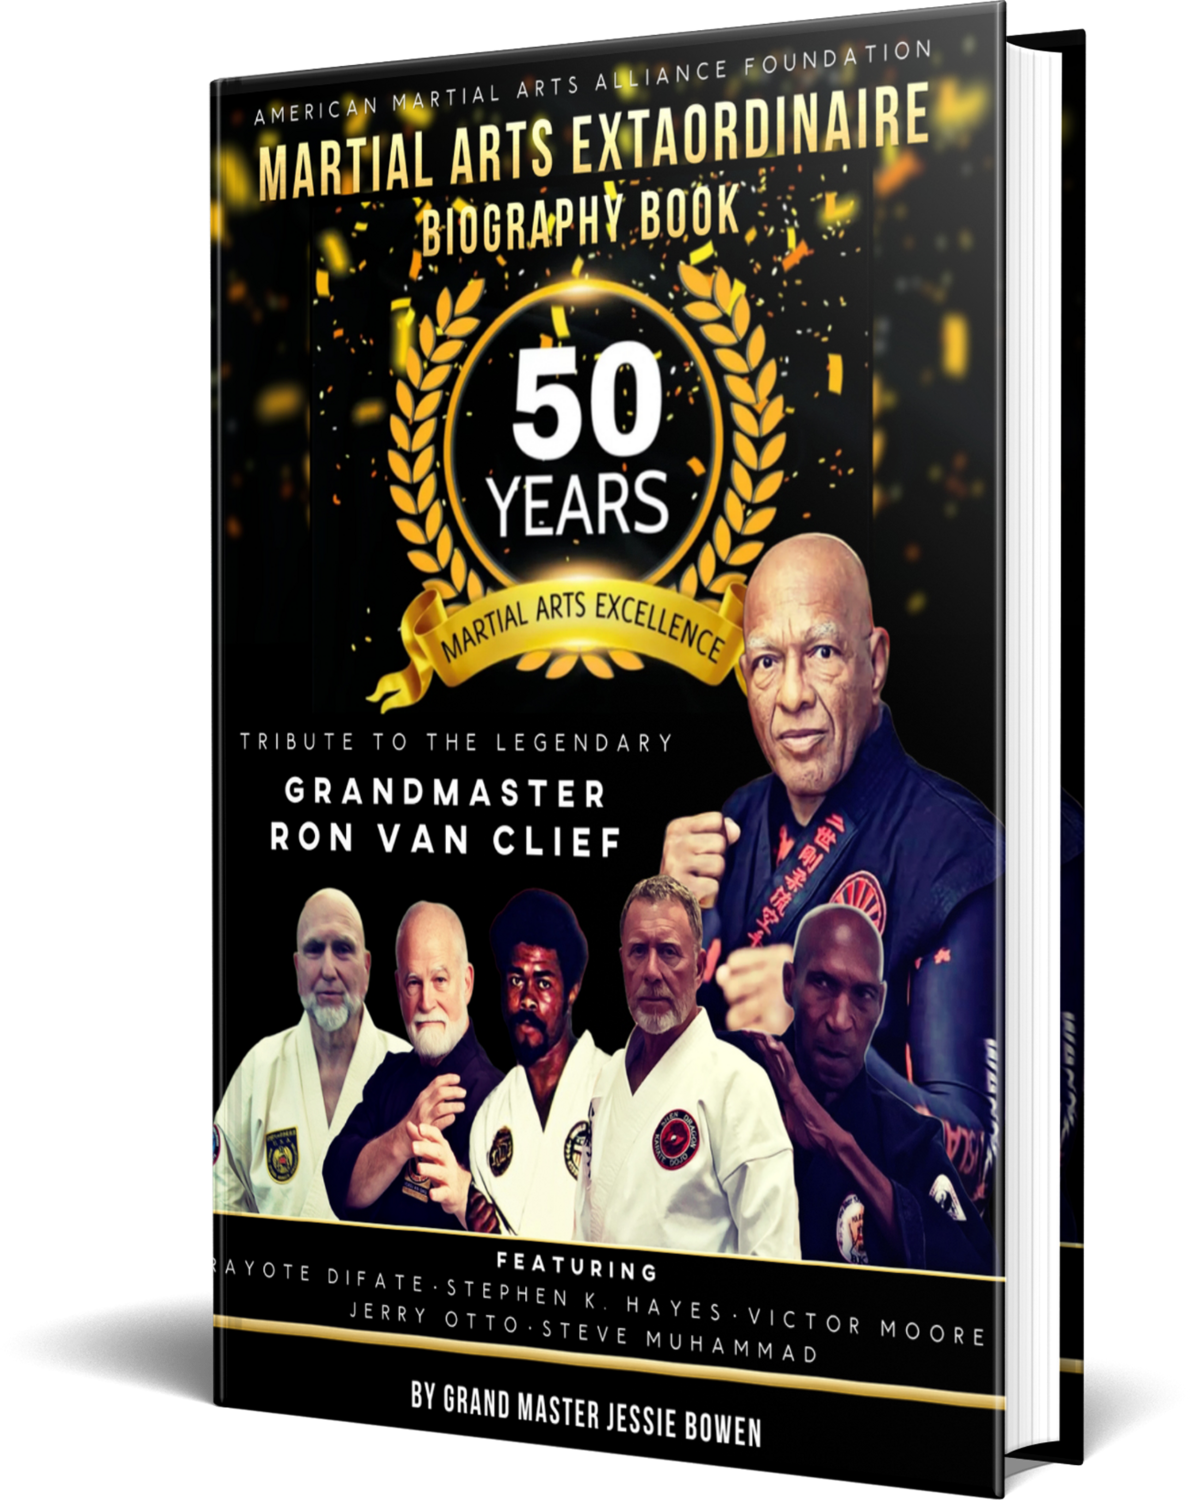 Martial Arts Extraordinaire Biography Book: Special Tribute to Ron Van Clief